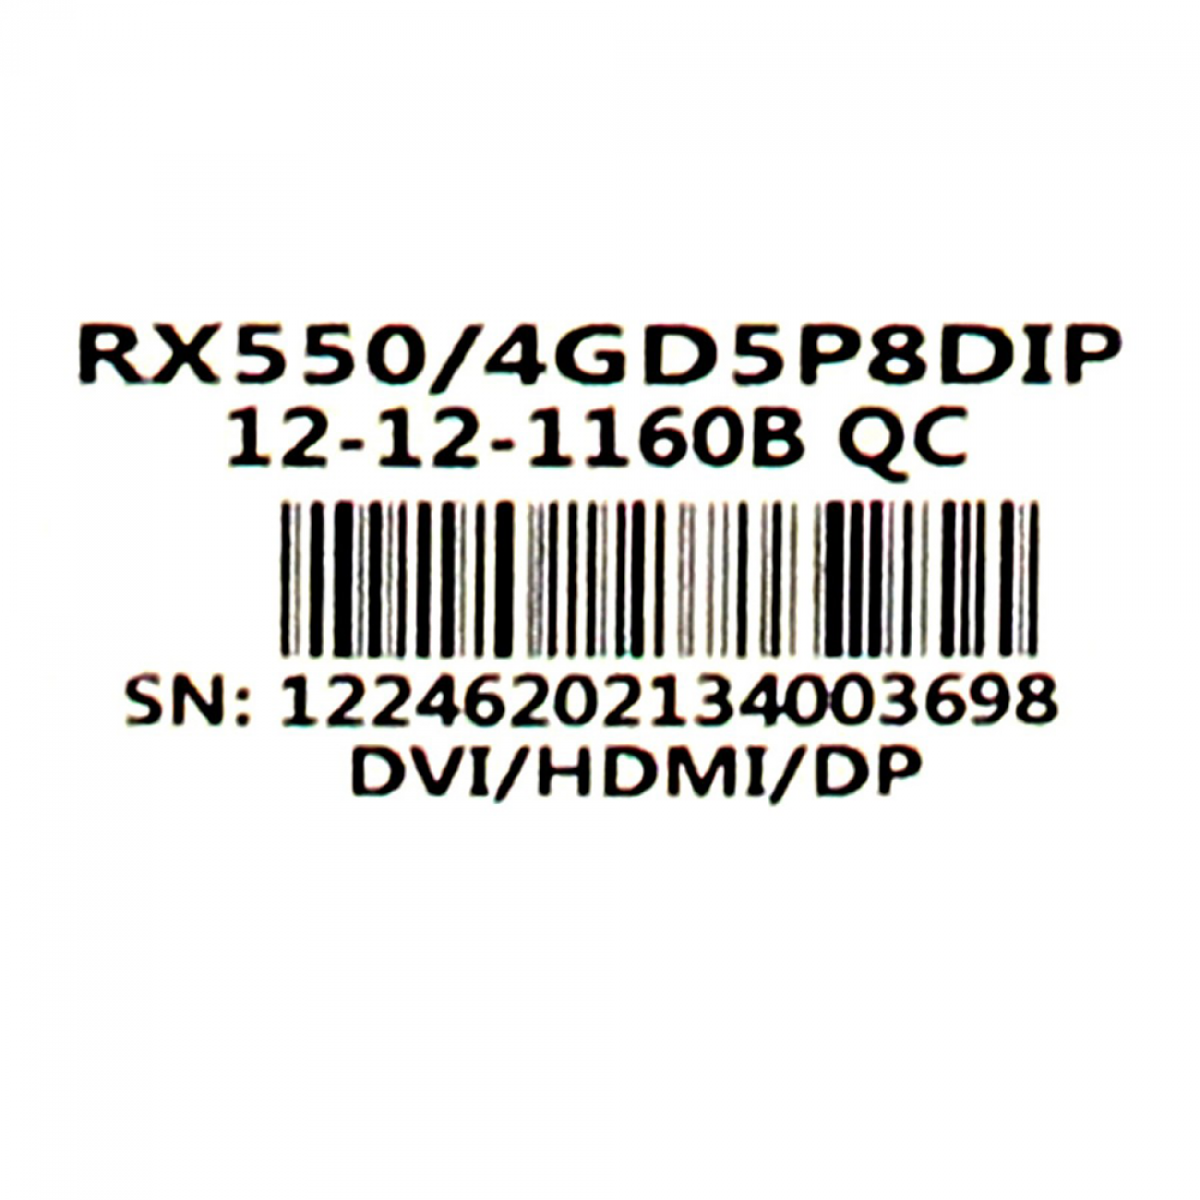 Placa de Vídeo SuperFrame Radeon RX 550 4GB, Dual Fan GDDR5, RX550/4GD5P8DIP